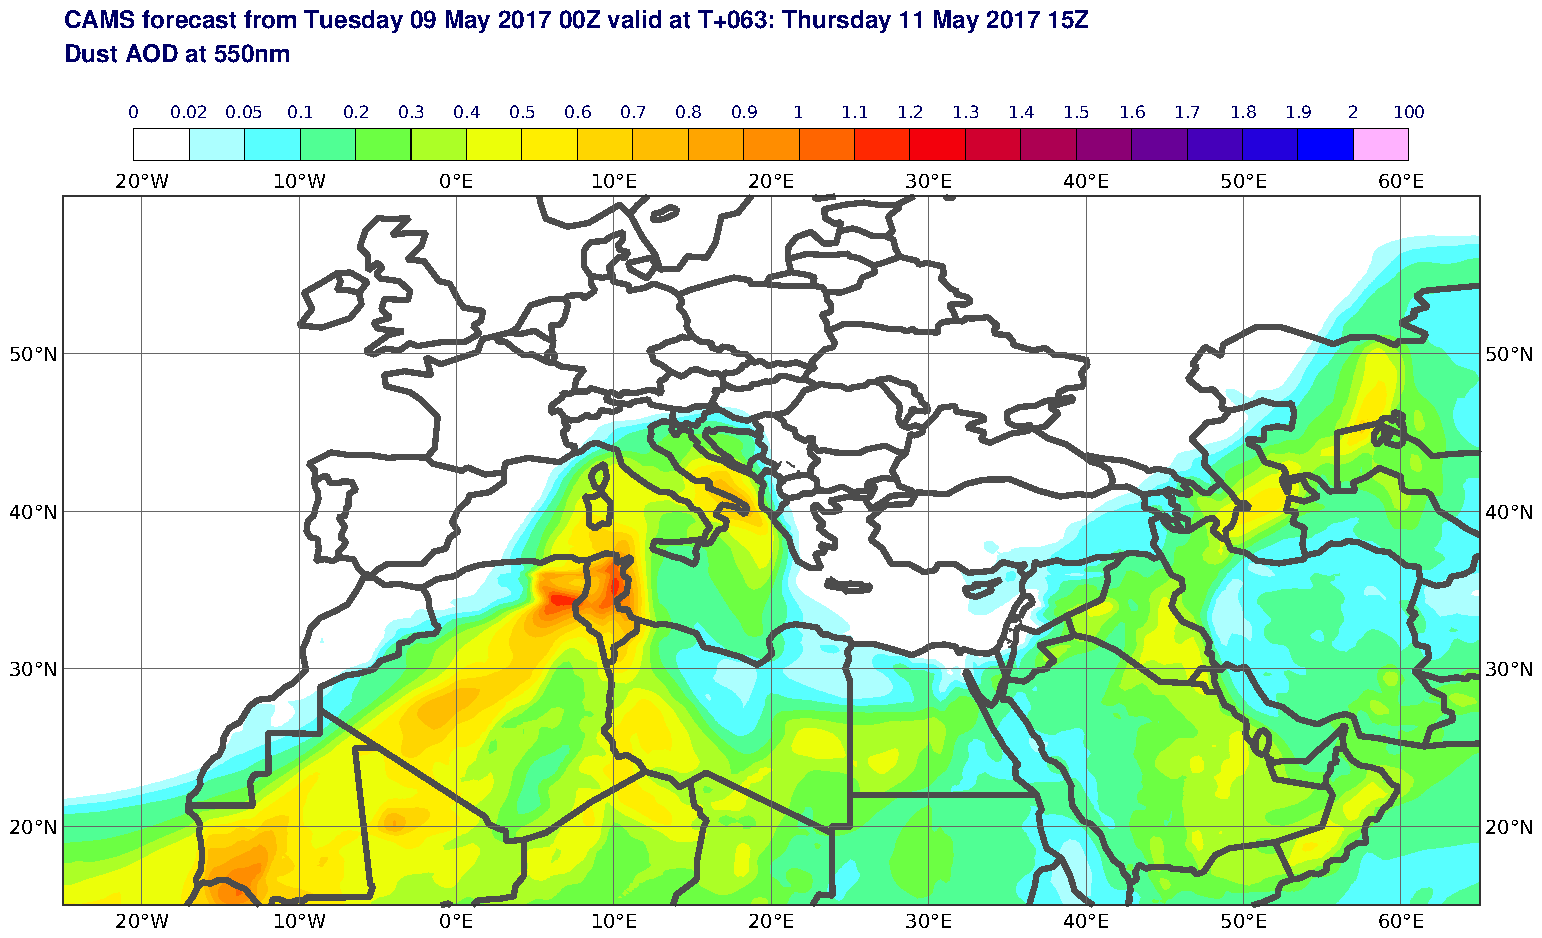 Dust AOD at 550nm valid at T63 - 2017-05-11 15:00